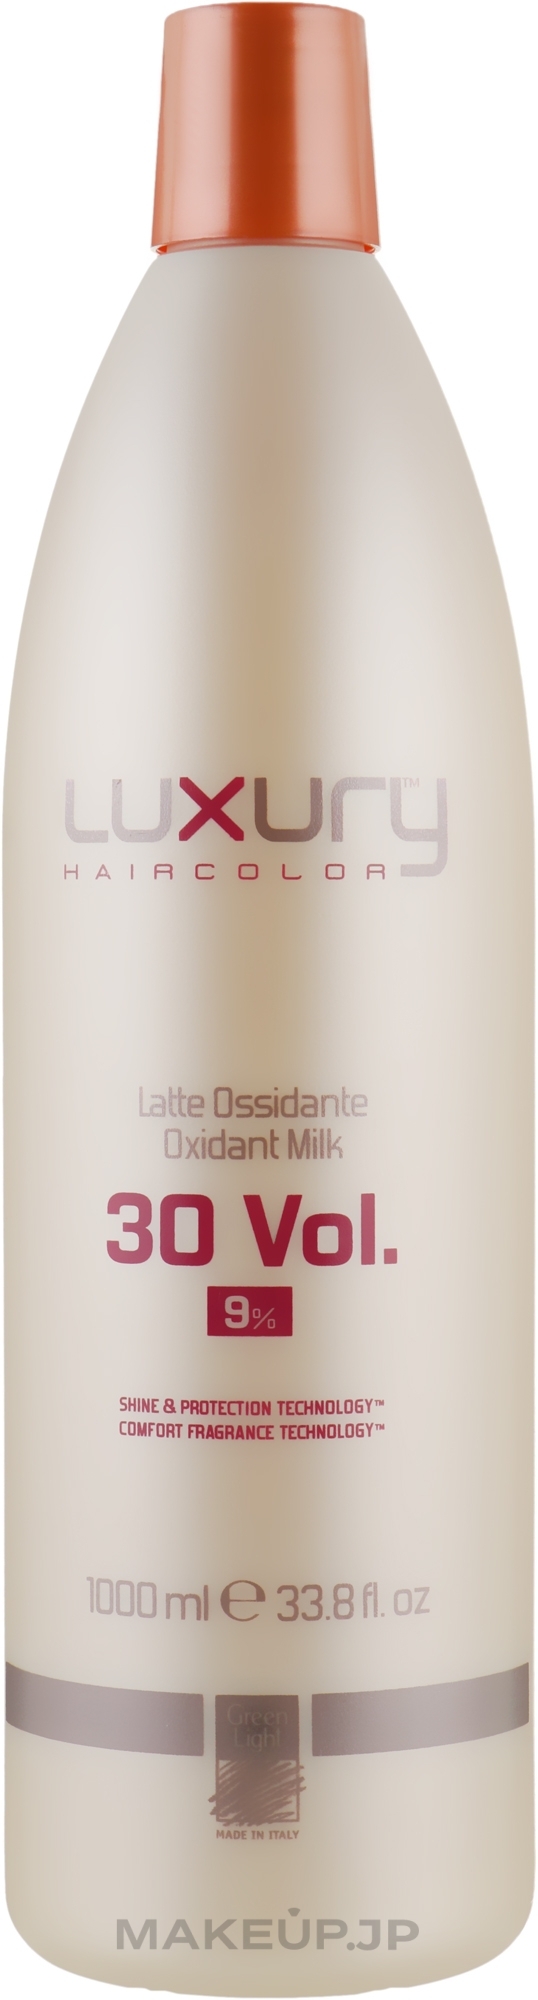 Milk Oxidant - Green Light Luxury Haircolor Oxidant Milk 9% 30 vol. — photo 1000 ml